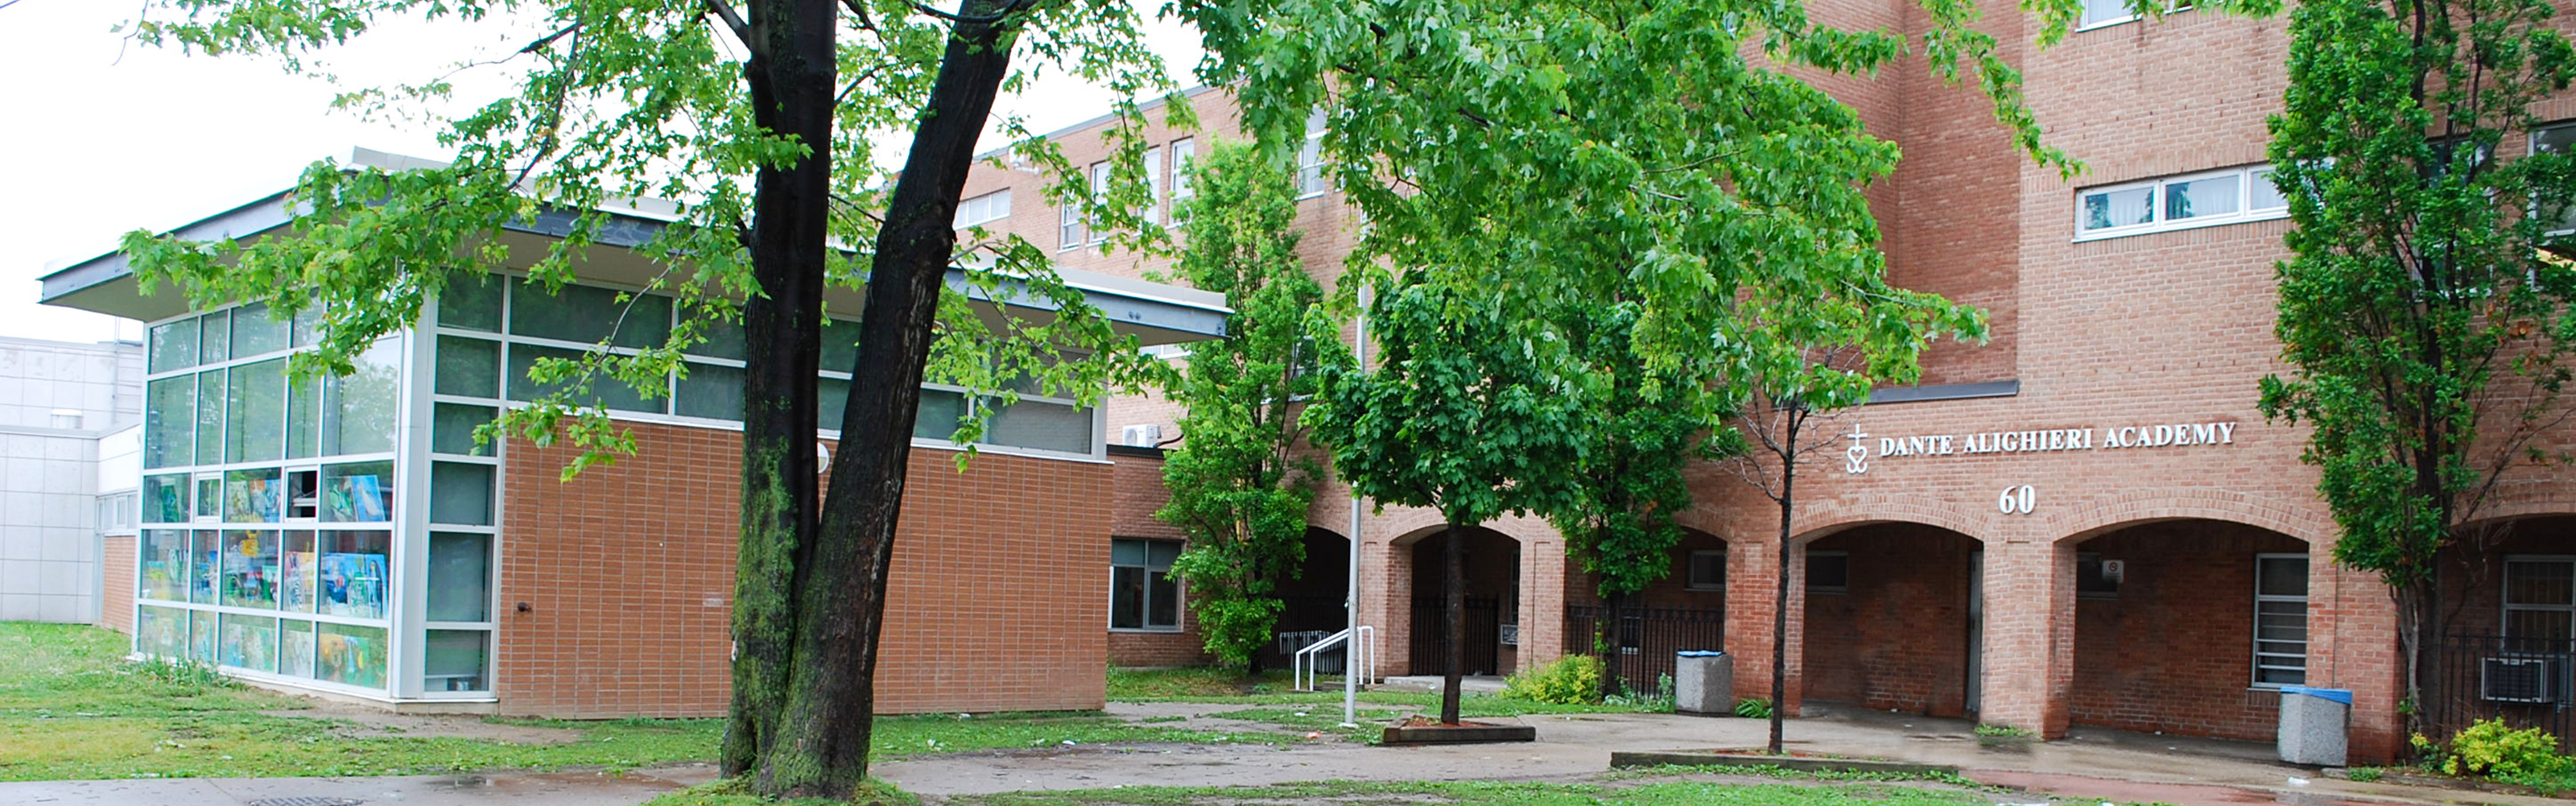 Front of the Dante Alighieri Academy Catholic Secondary School building